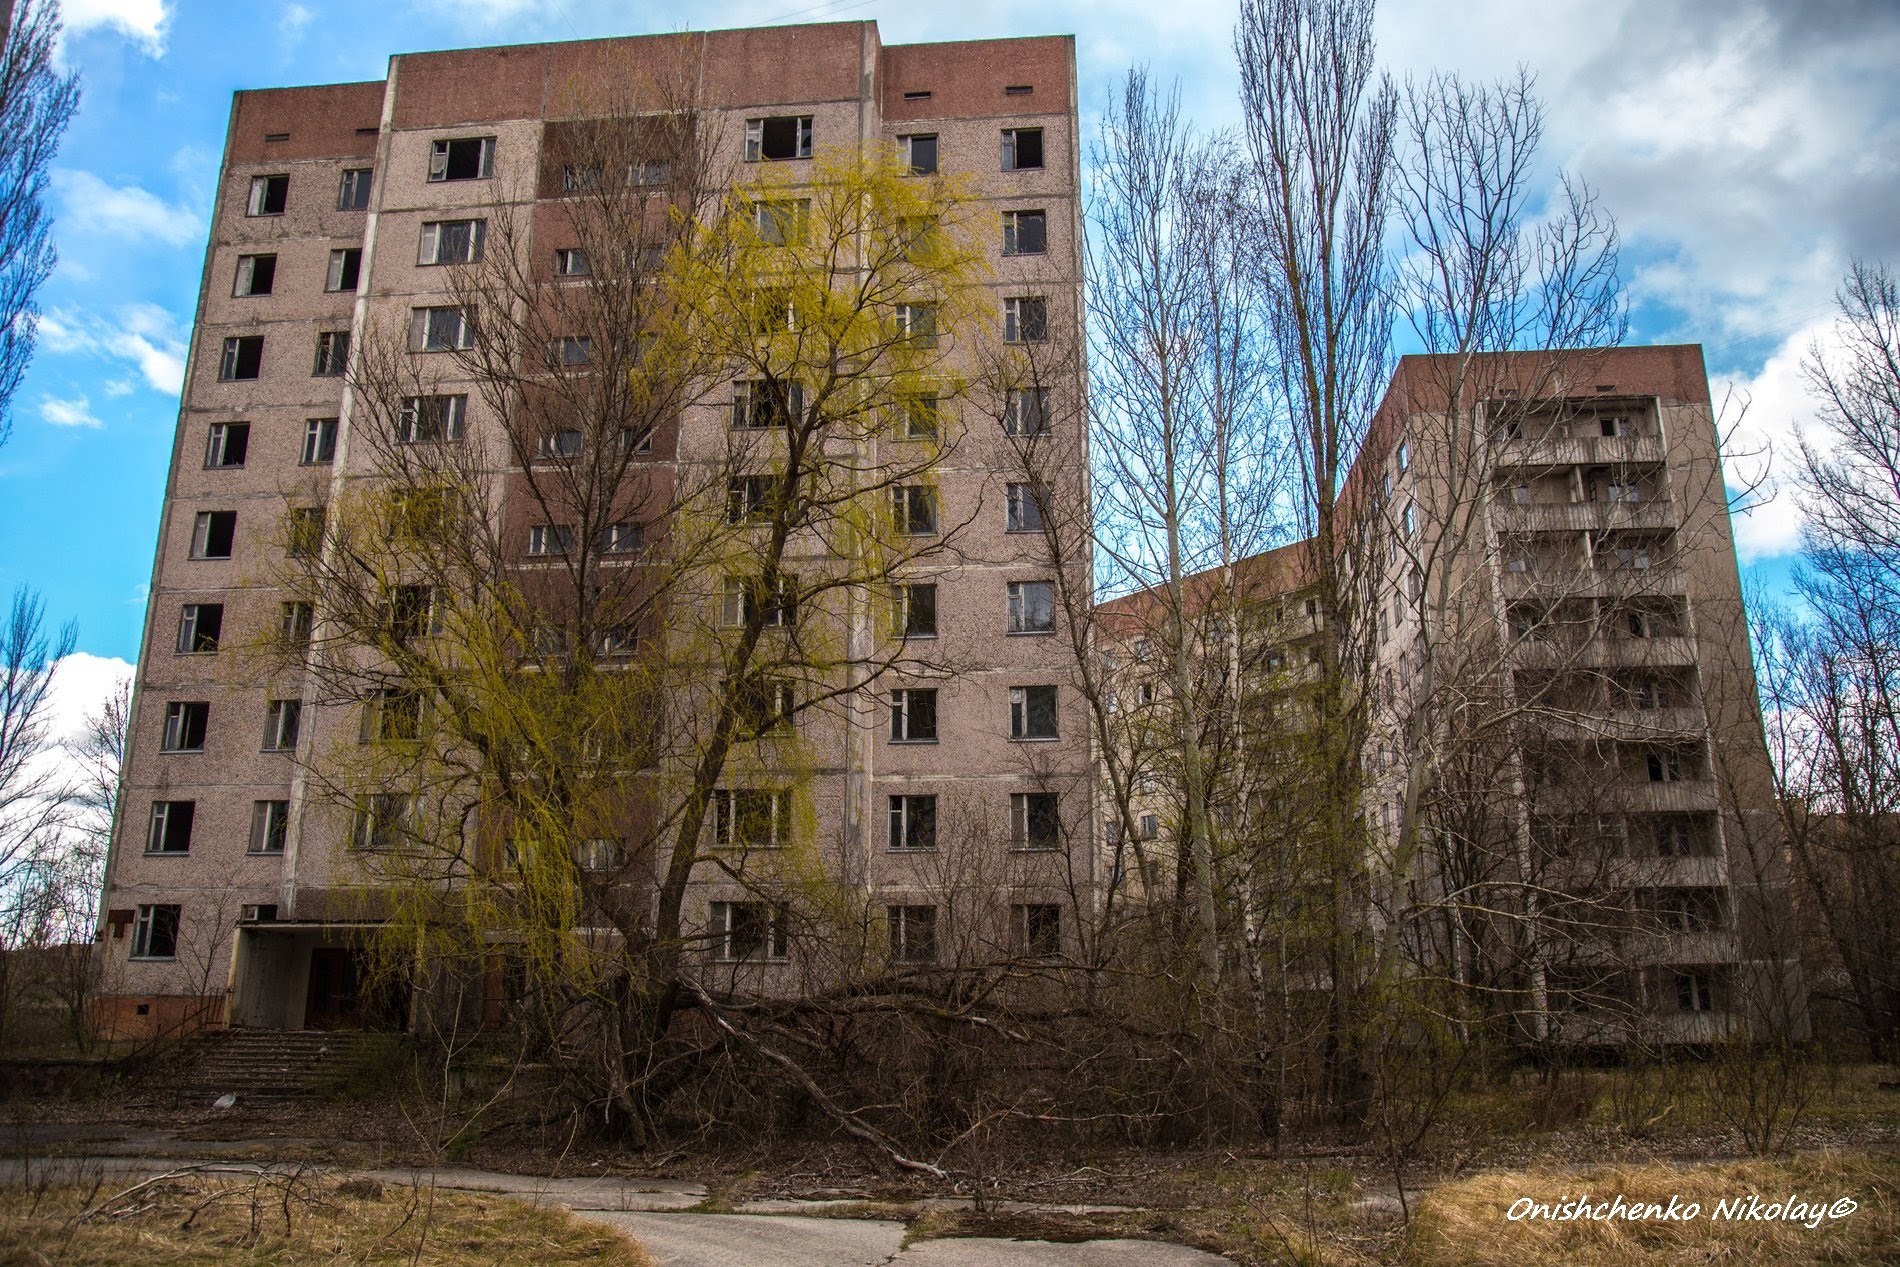 Pripyat today